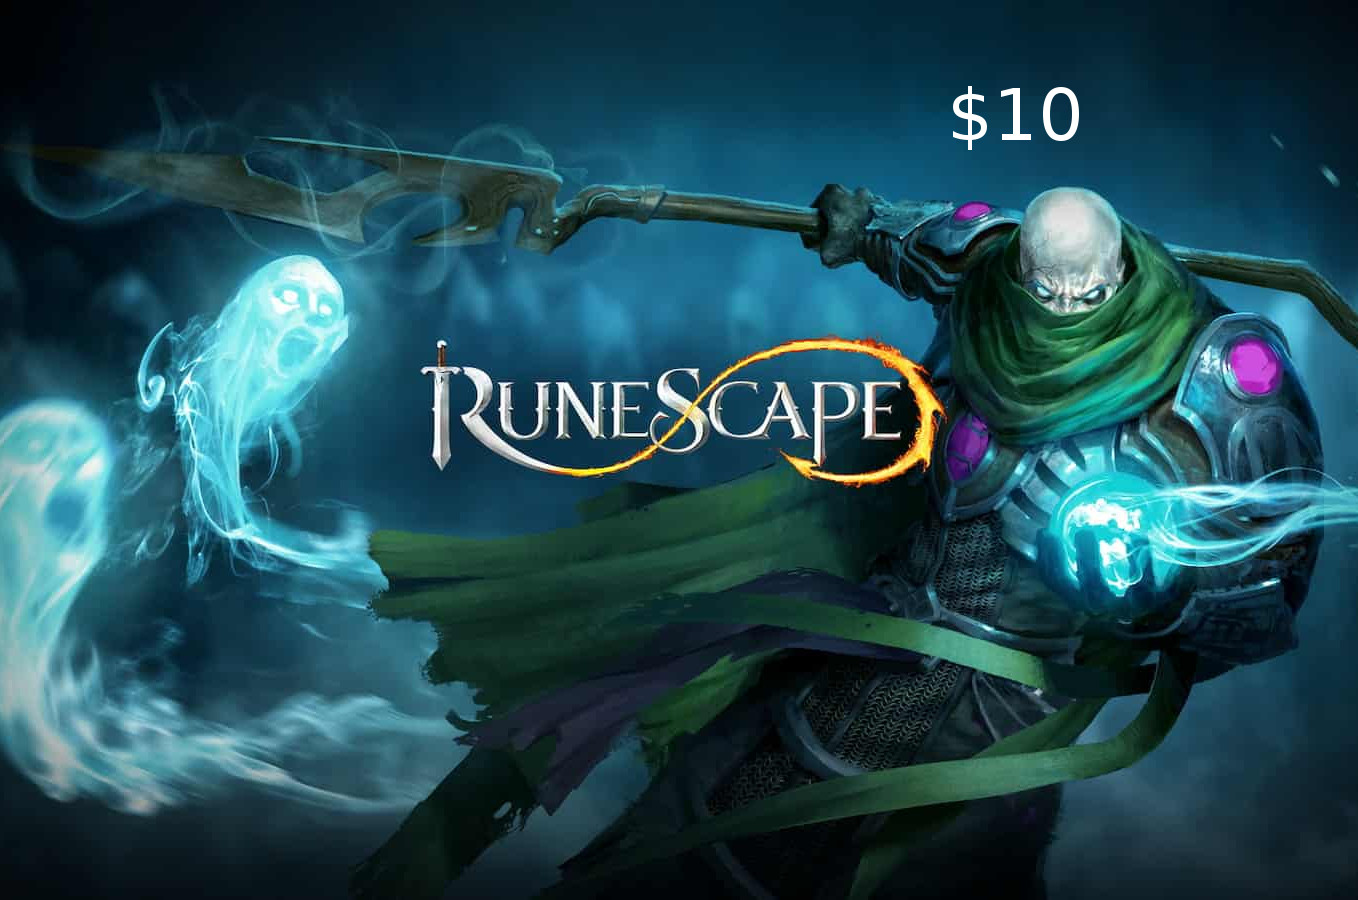 Runescape $10 Prepaid Game Card [$ 10.11]